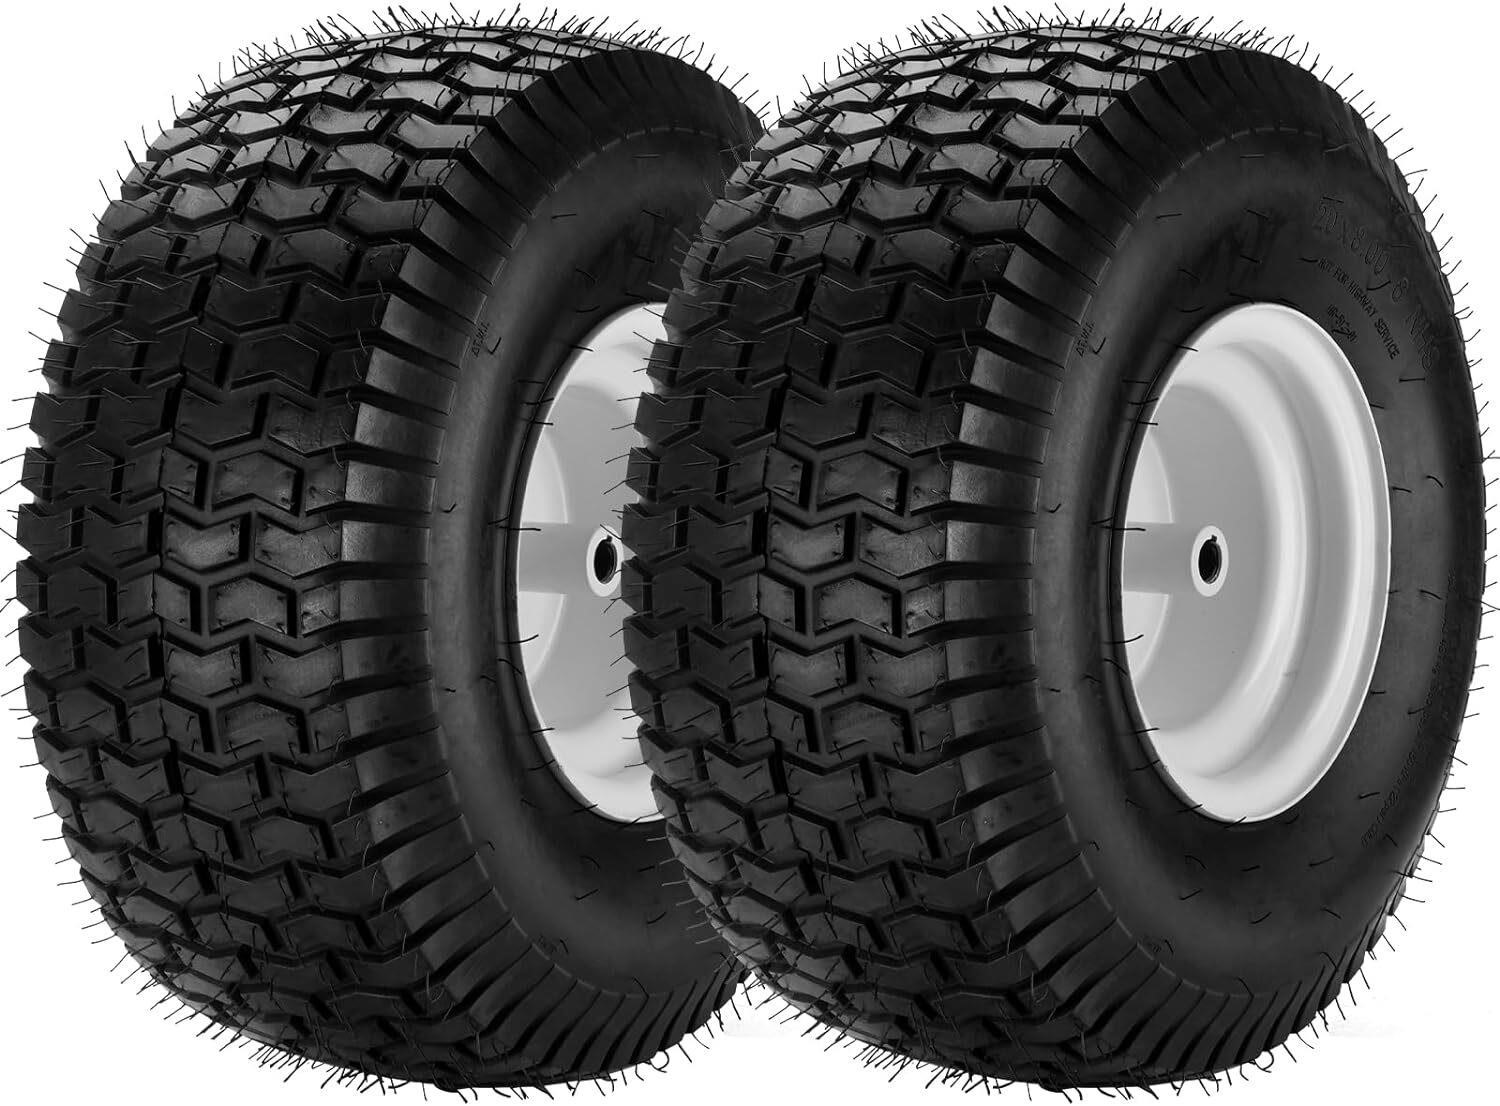 2PCS 20x8.00-8 Pneumatic Tires 4 Ply 965 lbs